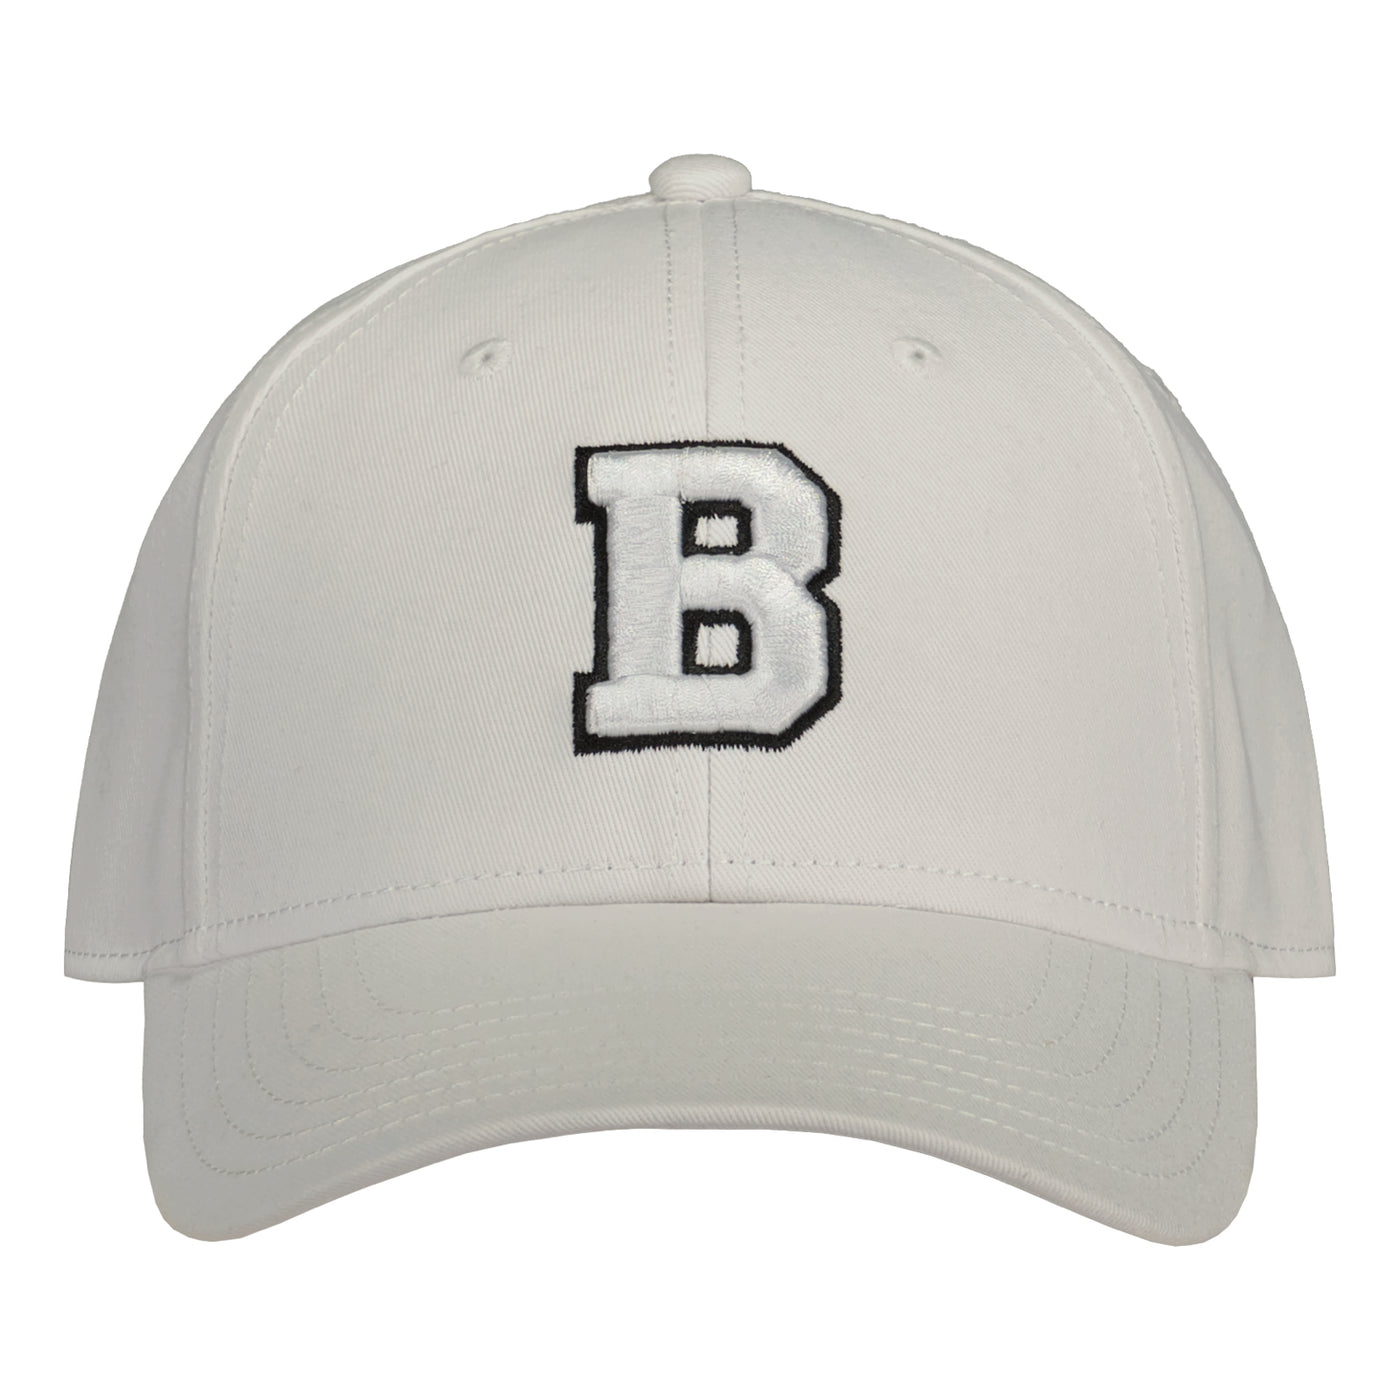 B BASEBALL CAP Antique White